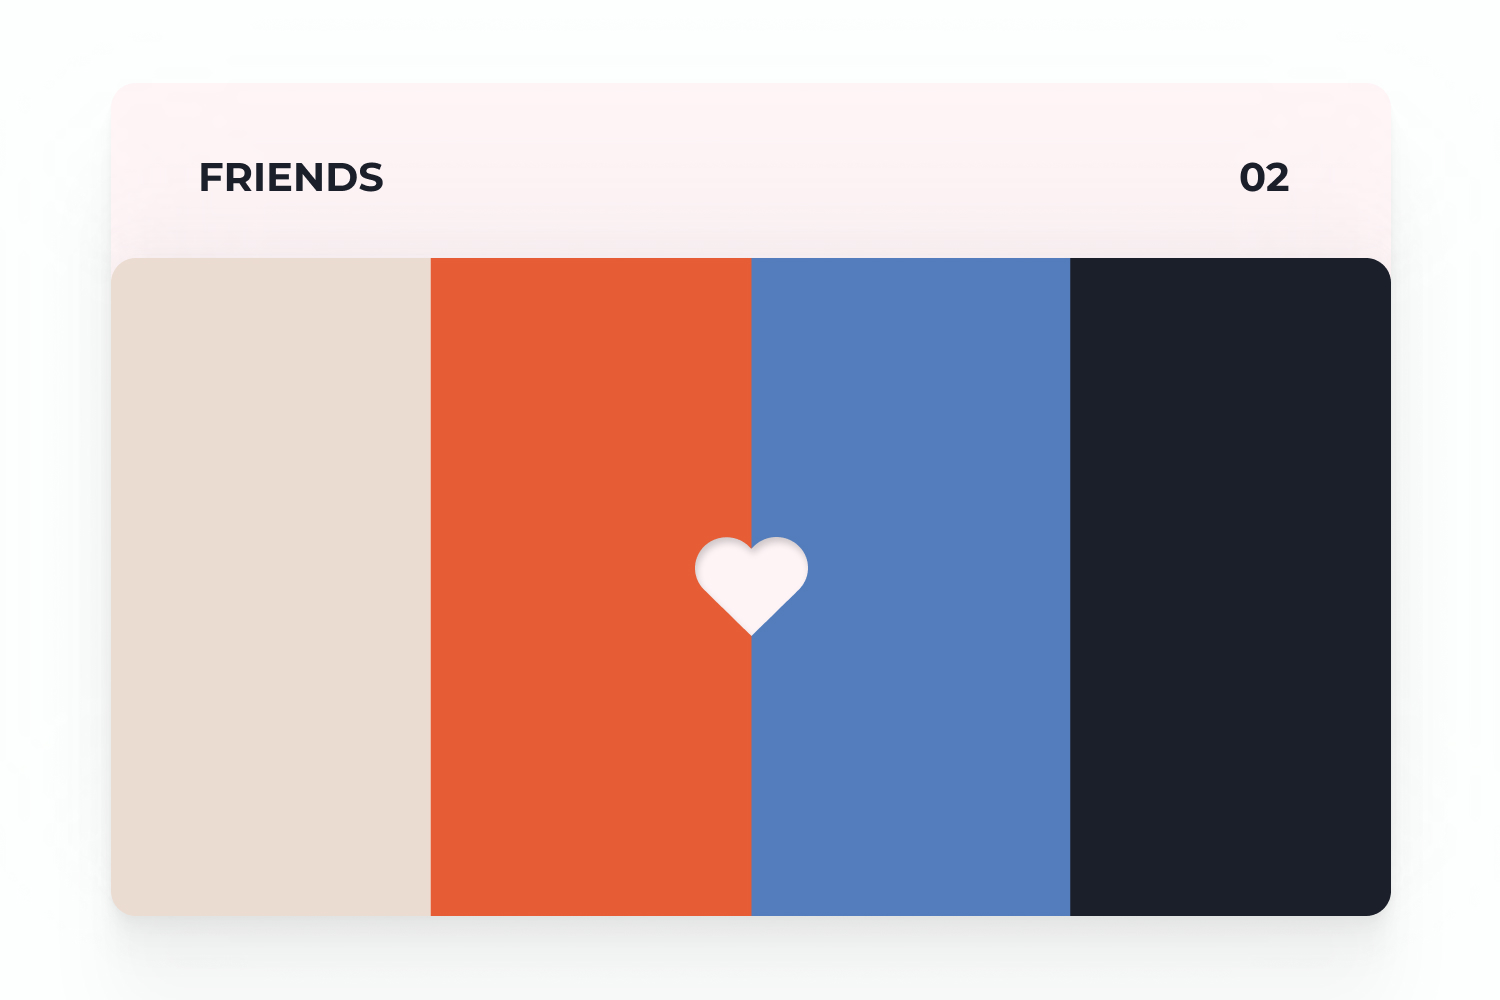 Valentine's colors for friends beige, orange, blue, black.